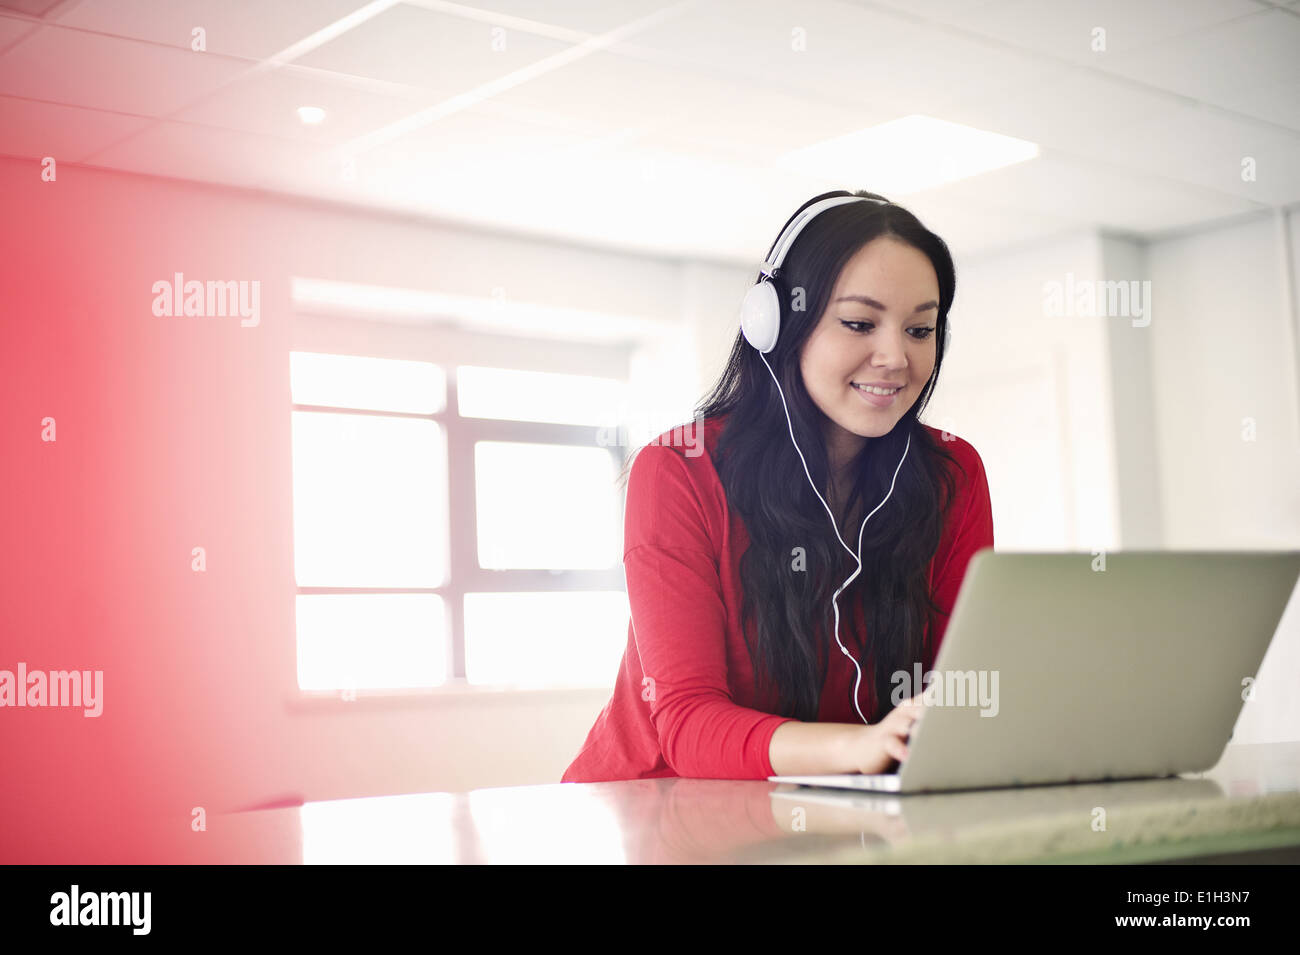 Young woman wearing headphones using laptop Stock Photo